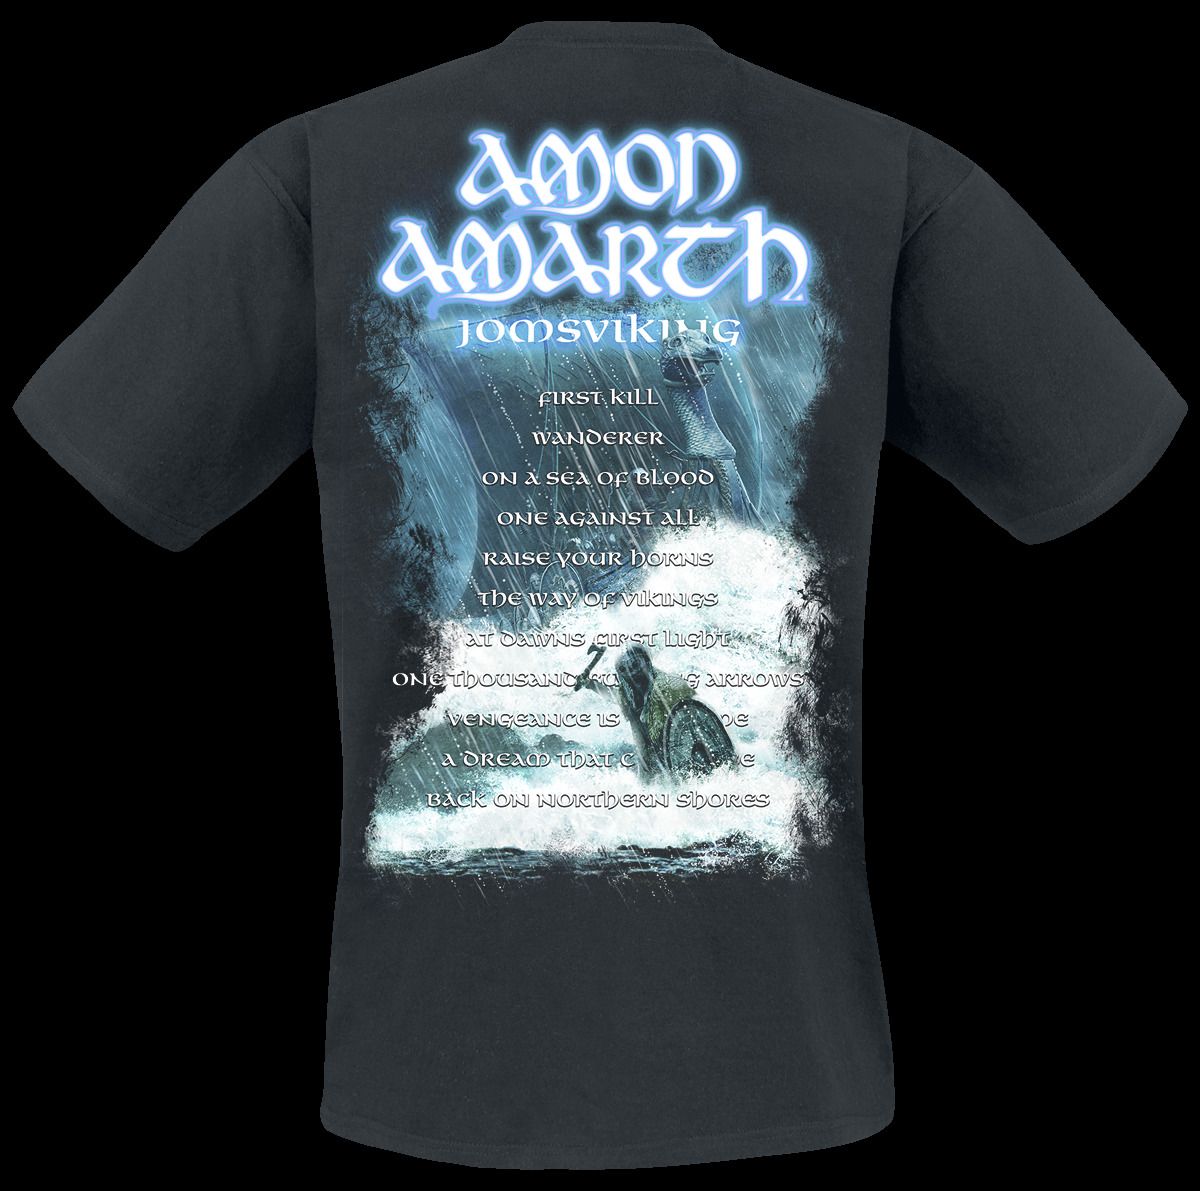 Bolsa Guarda la ropa Mala suerte Amon Amarth Jomsviking Camiseta negra Classic Quality High camiseta Style  Round Style camiseta Tees Custom Jersey